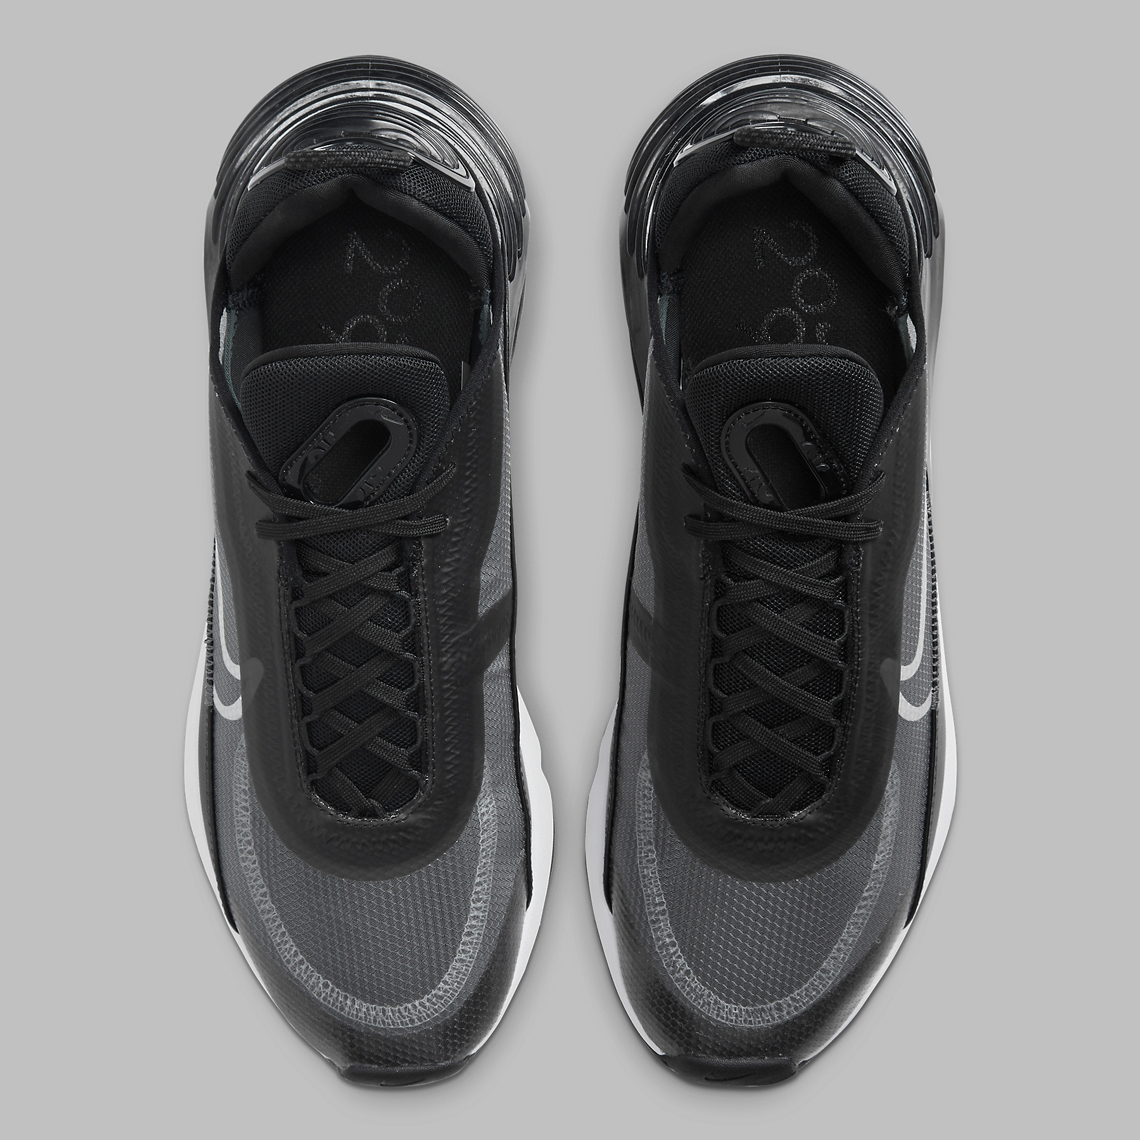 Nike Air Max 2090 Black CW7306-001 Release Date | SneakerNews.com